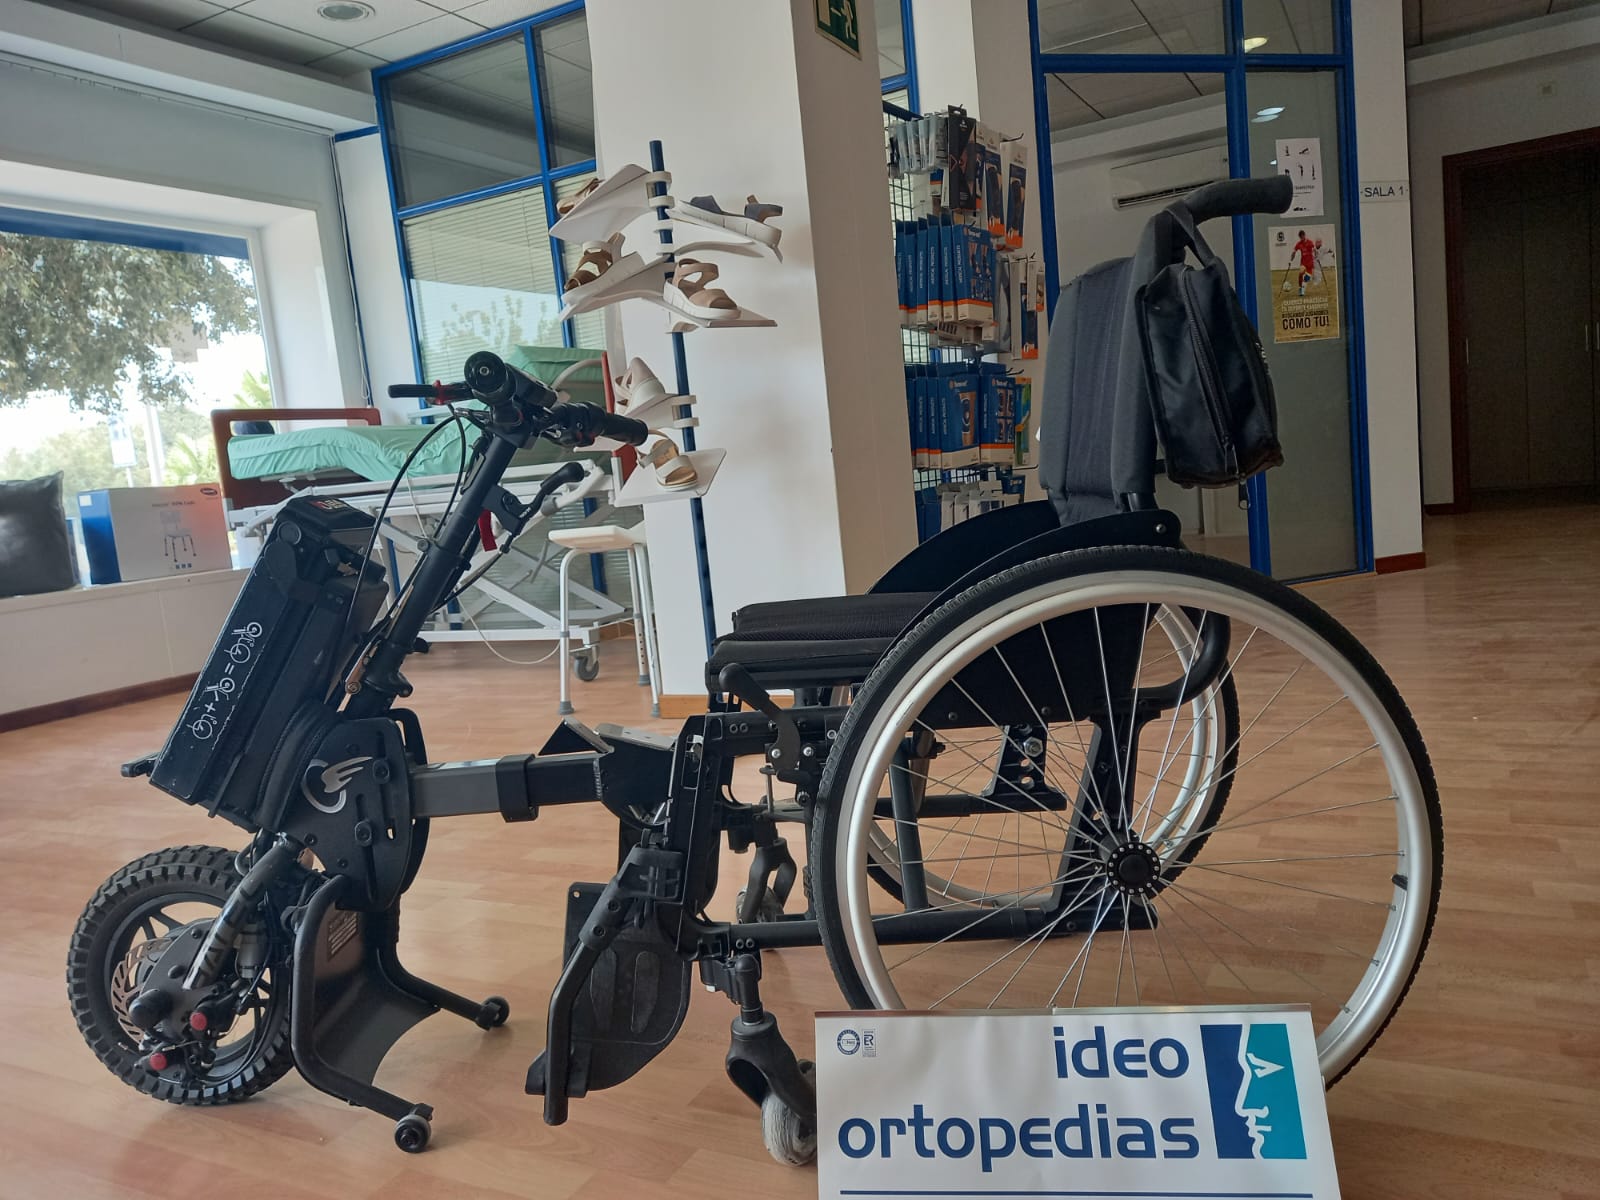 Ortopedia Ideo Batec Mobility official dealer in Sevilla